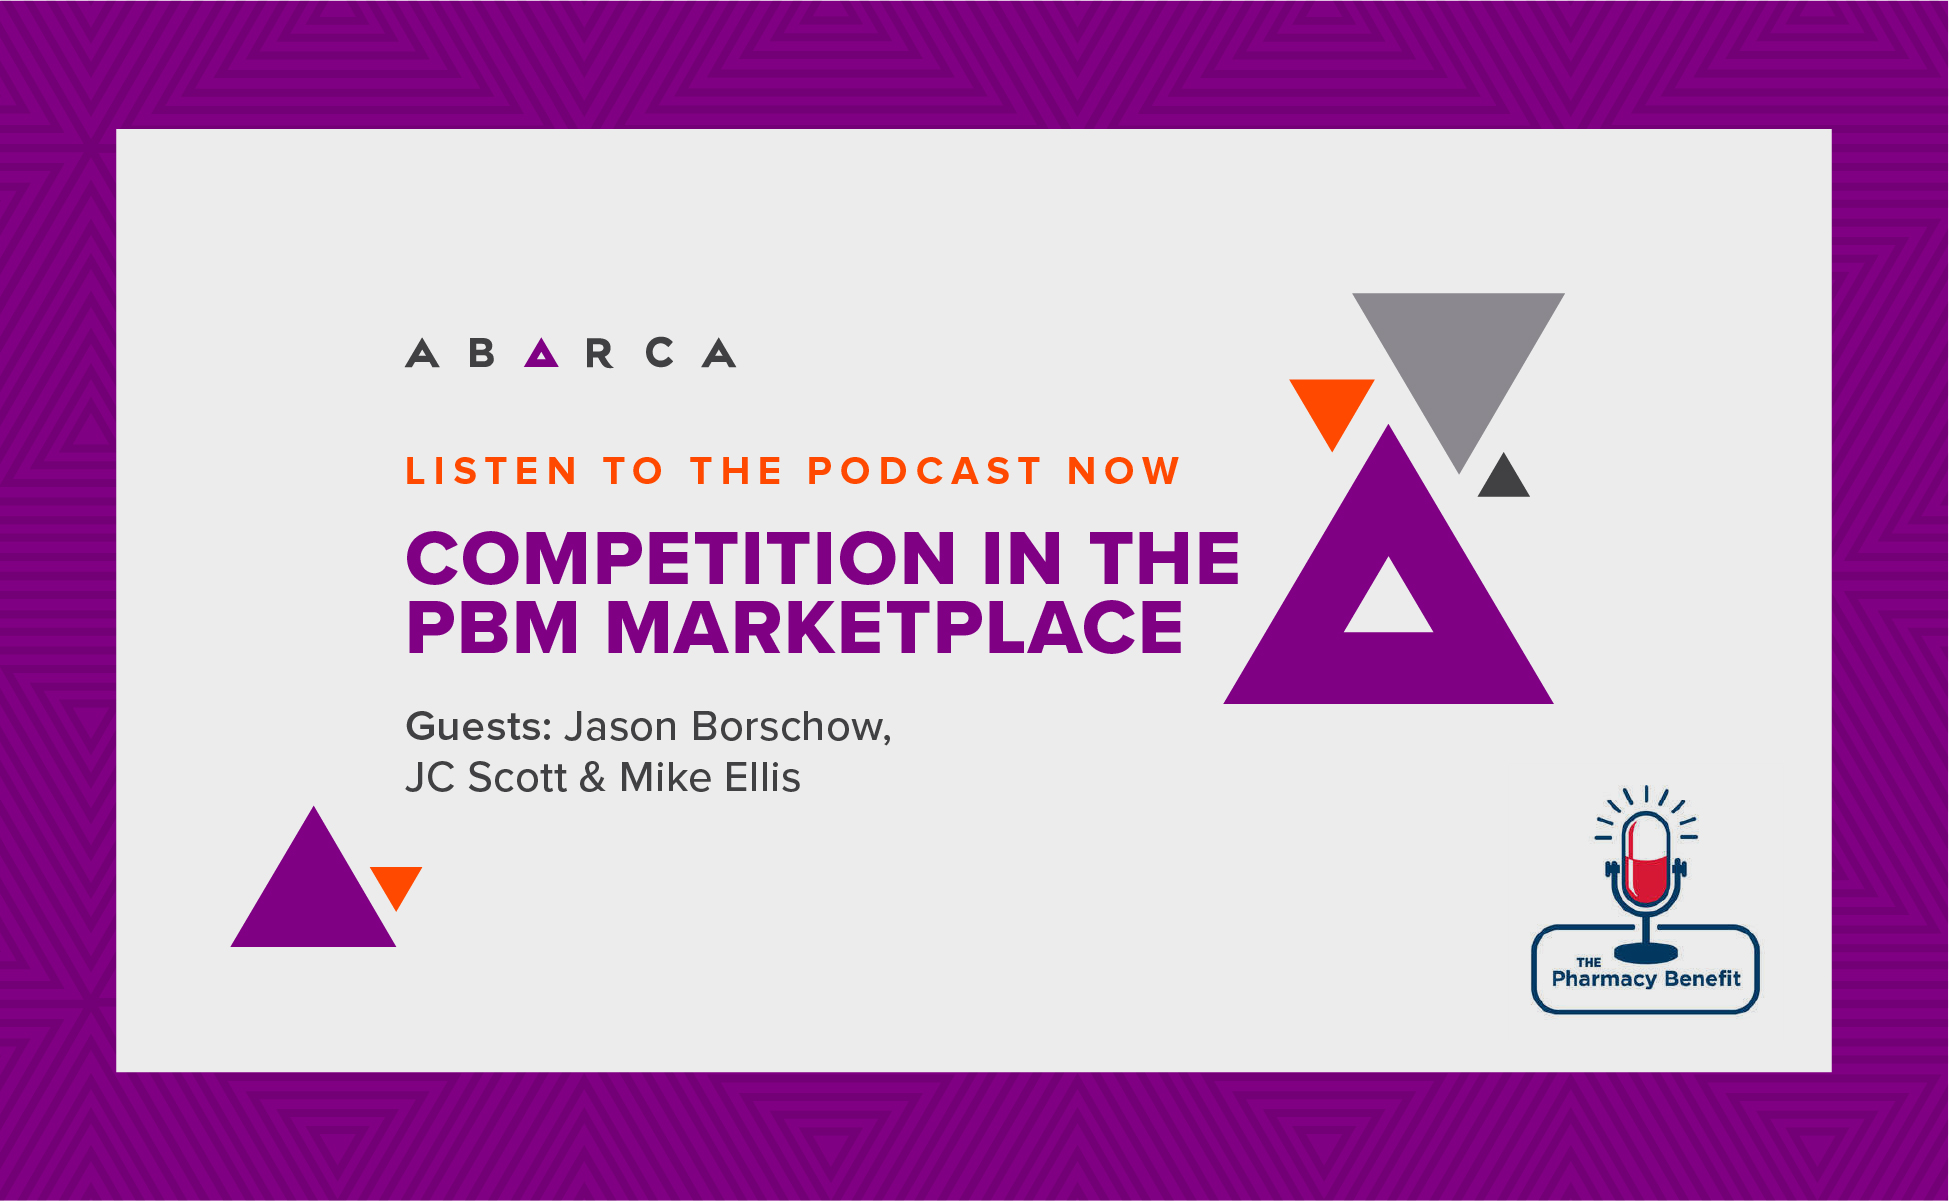 Abarca Health: Jason Borschow interviewed on the PCMA podcast